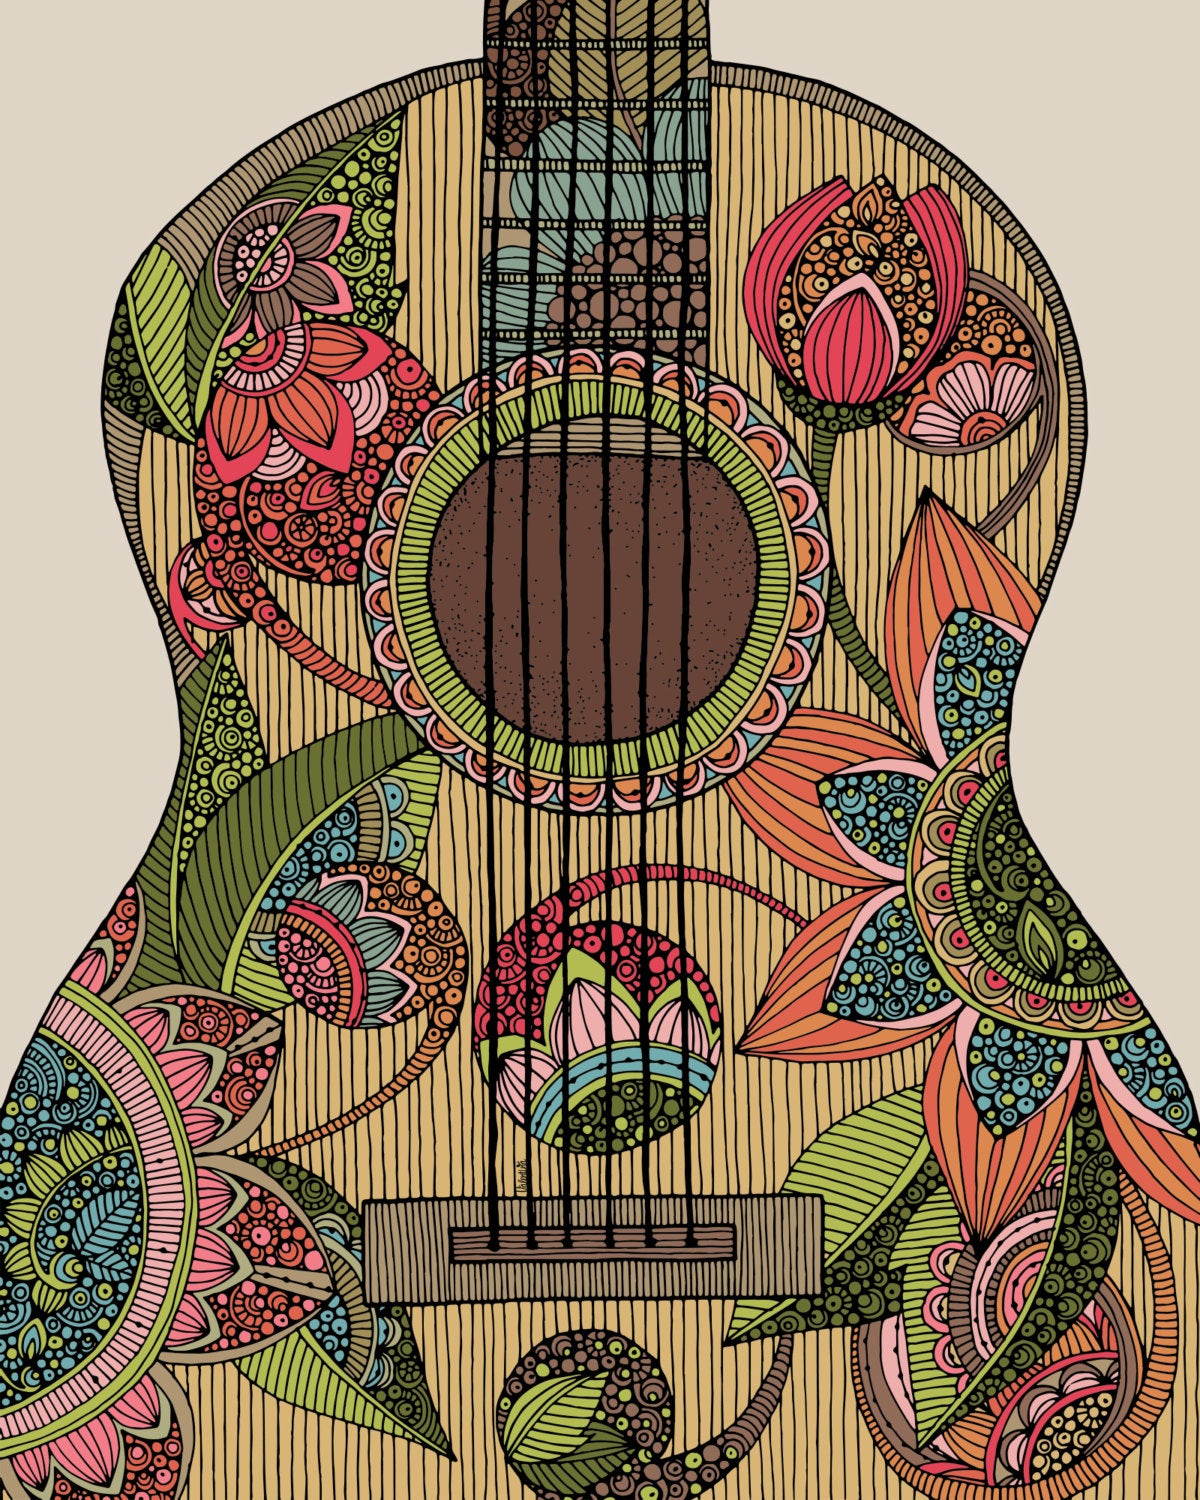 The guitar - Home Decor - Music Art -Decor - Room decor - Flowers - Doodle Art - Music Print Decor